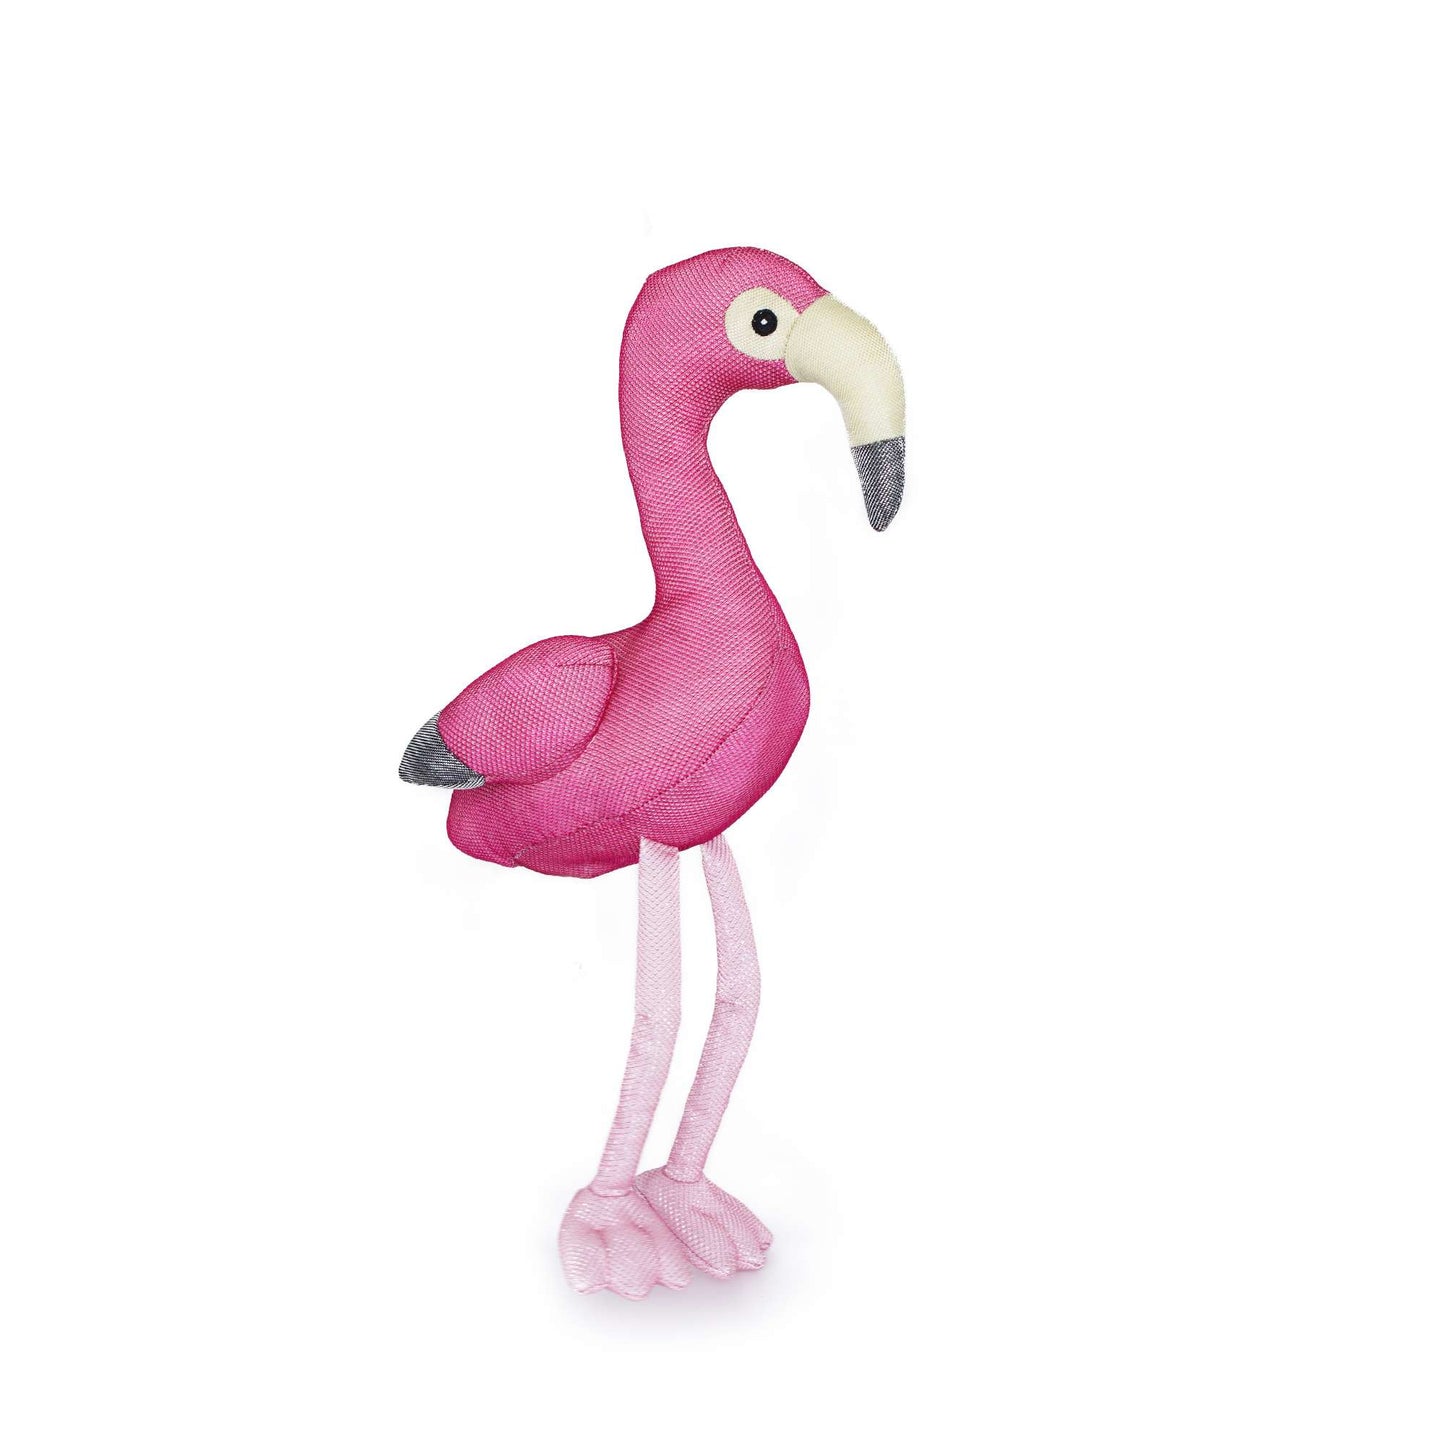 skinny body long legs side view flamingo stuffed animal PlushThis